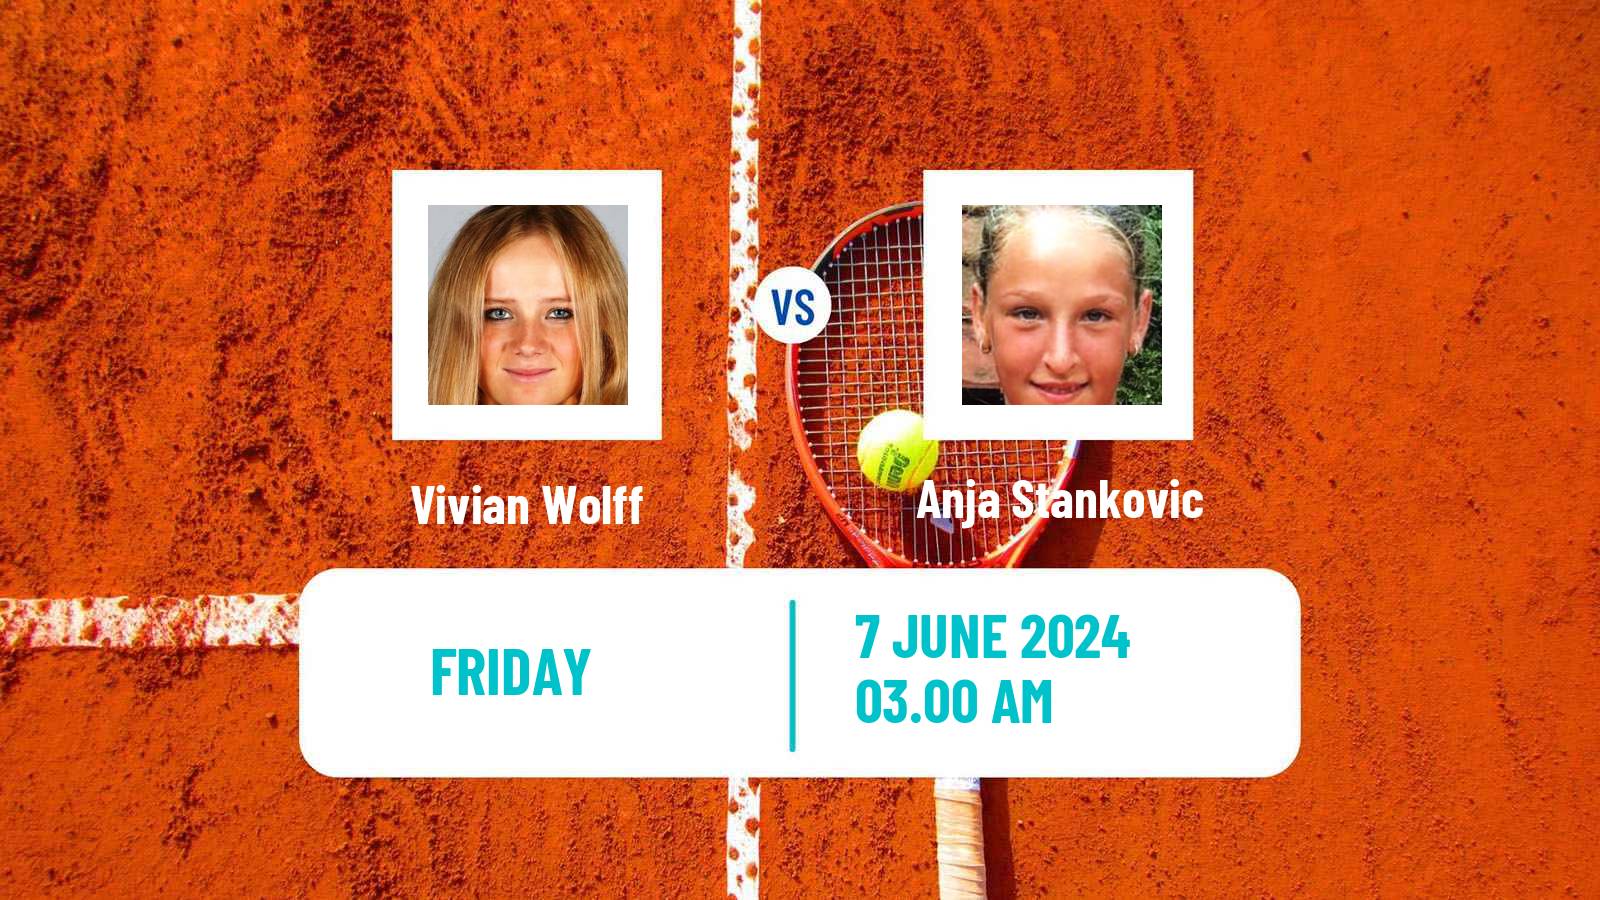 Tennis ITF W35 Kursumlijska Banja 2 Women Vivian Wolff - Anja Stankovic